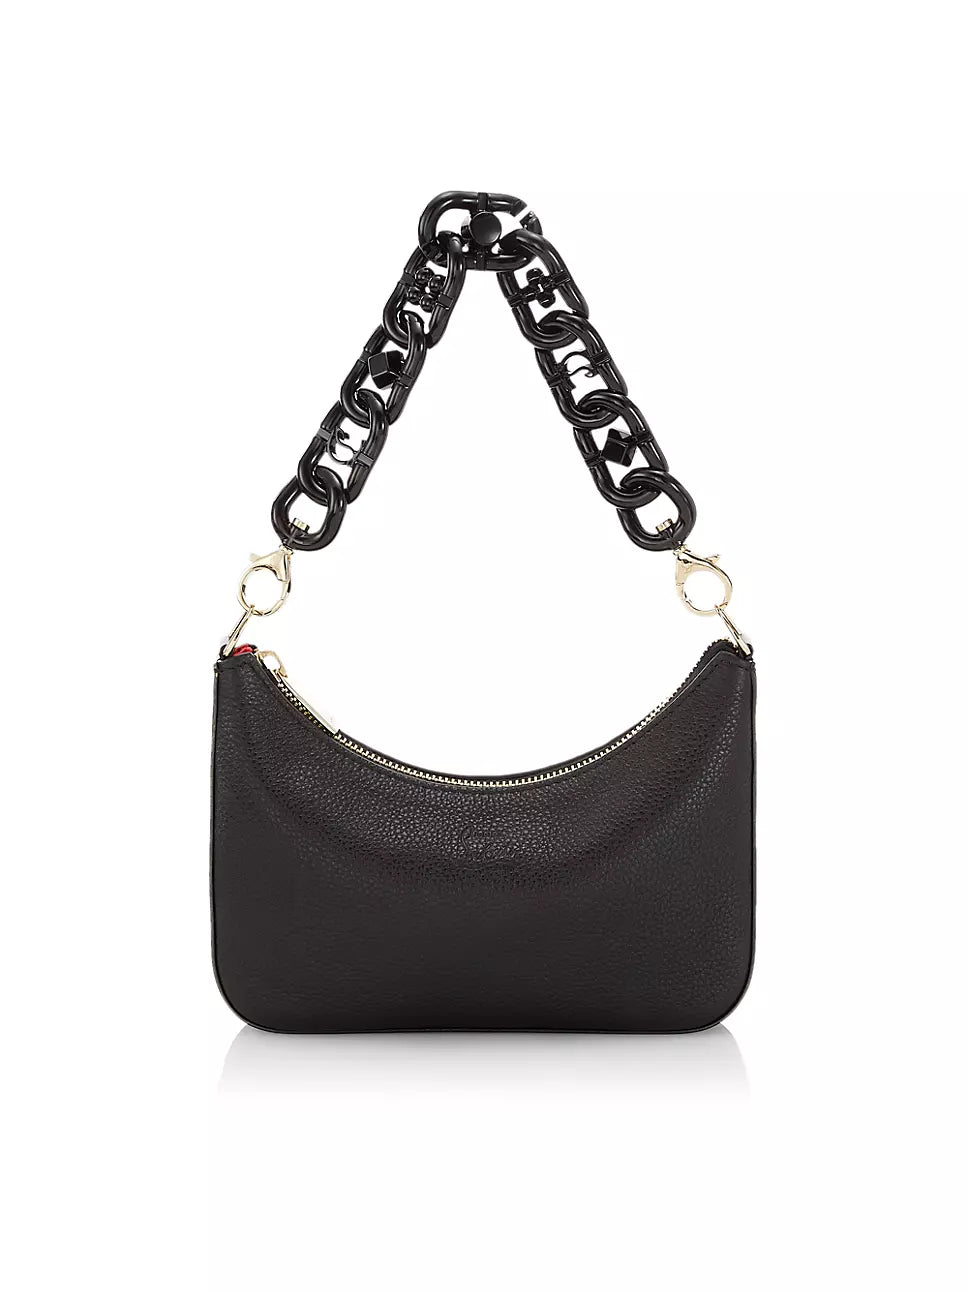 SHEIN Patent Leather Purse Crossbody Hand Chain Black White Brown Medium  Handbag